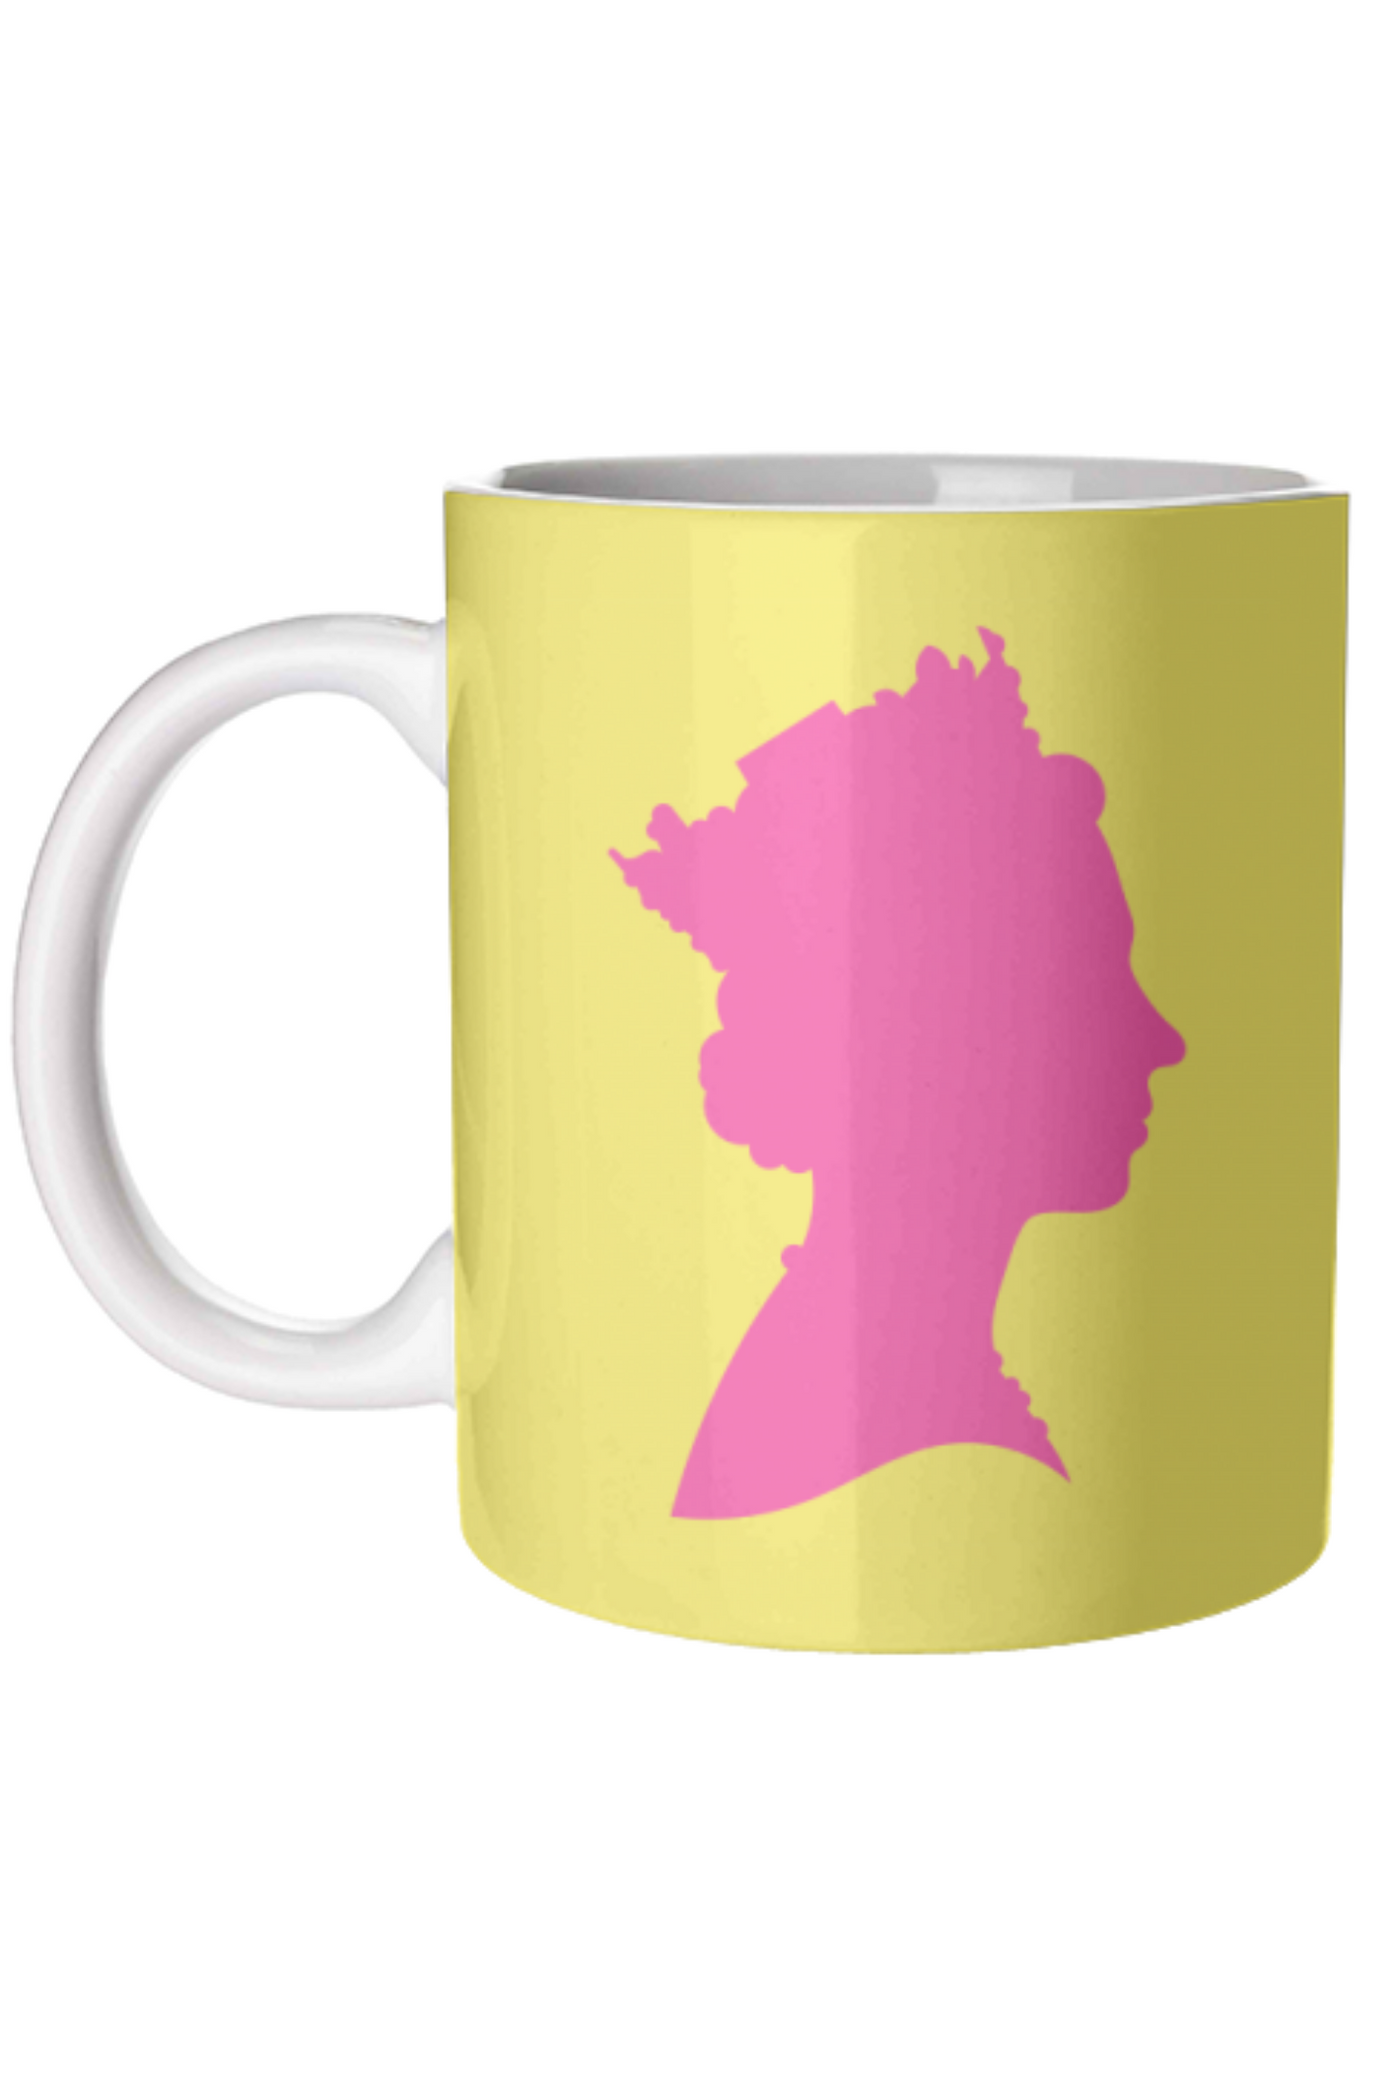 Her Majestic Majesty Mug | Jezabel Boutique